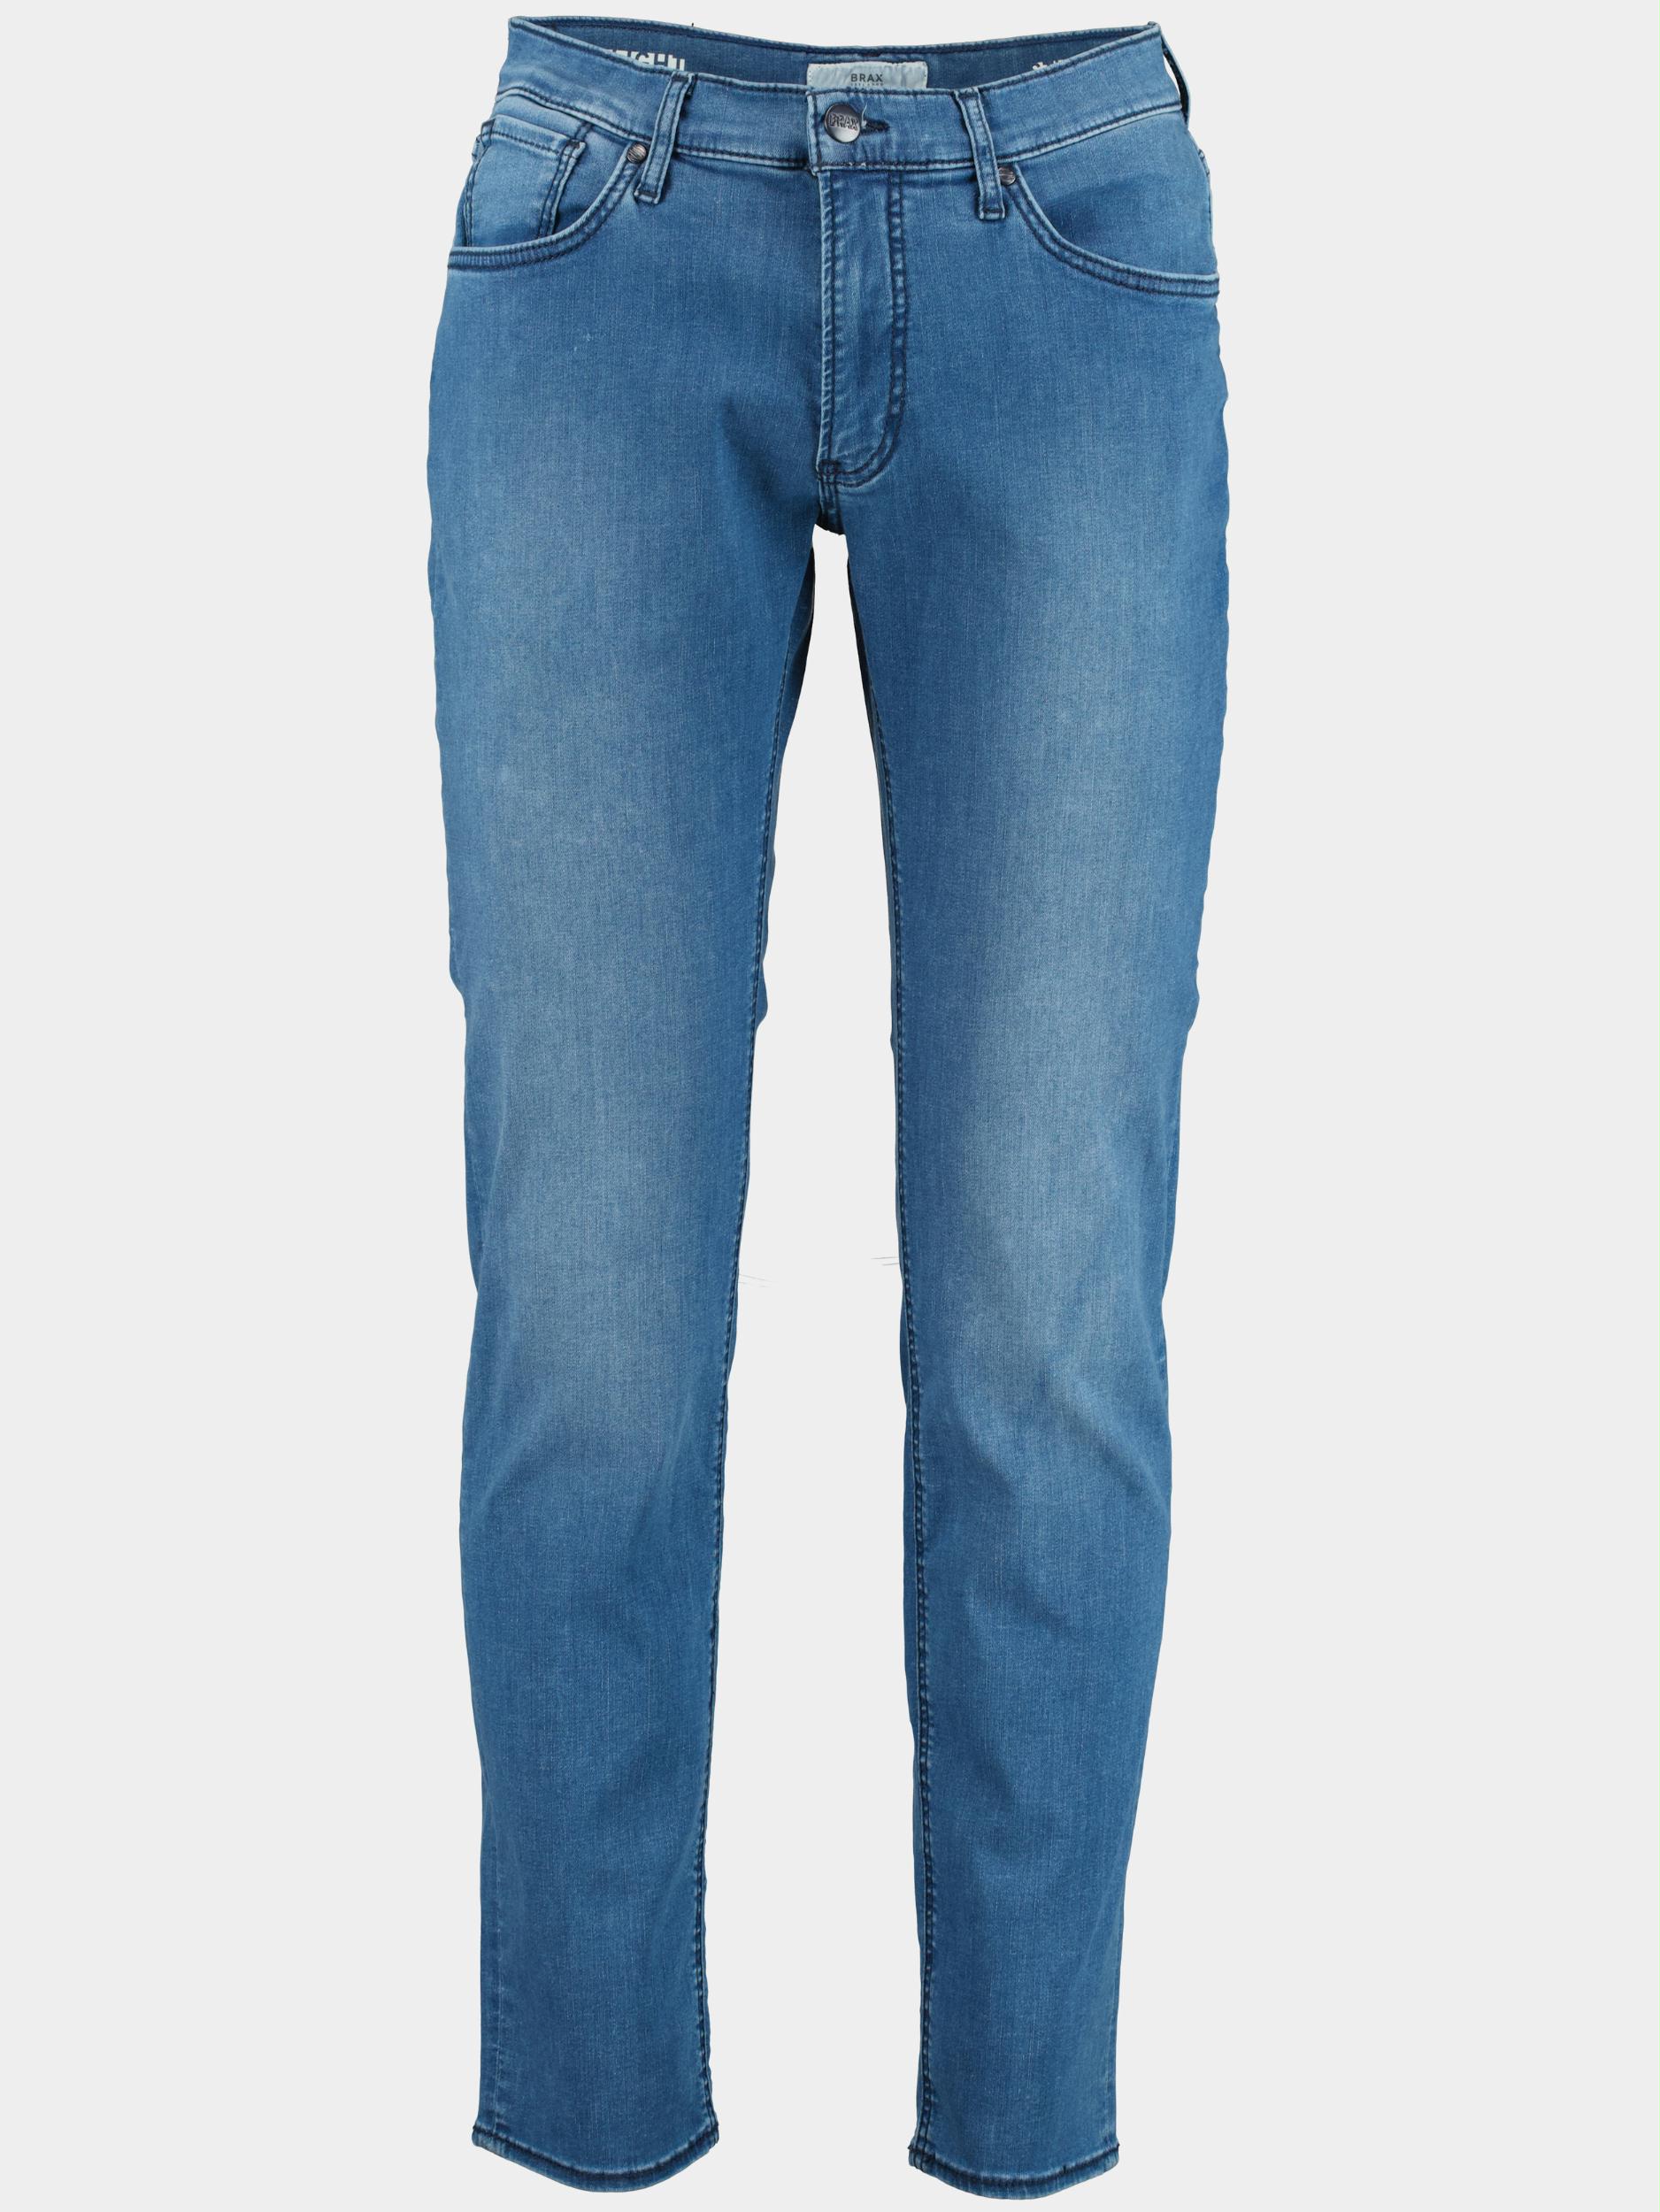 Brax 5-Pocket Jeans Blauw STYLE.CHUCK 81-6278 07953020/16